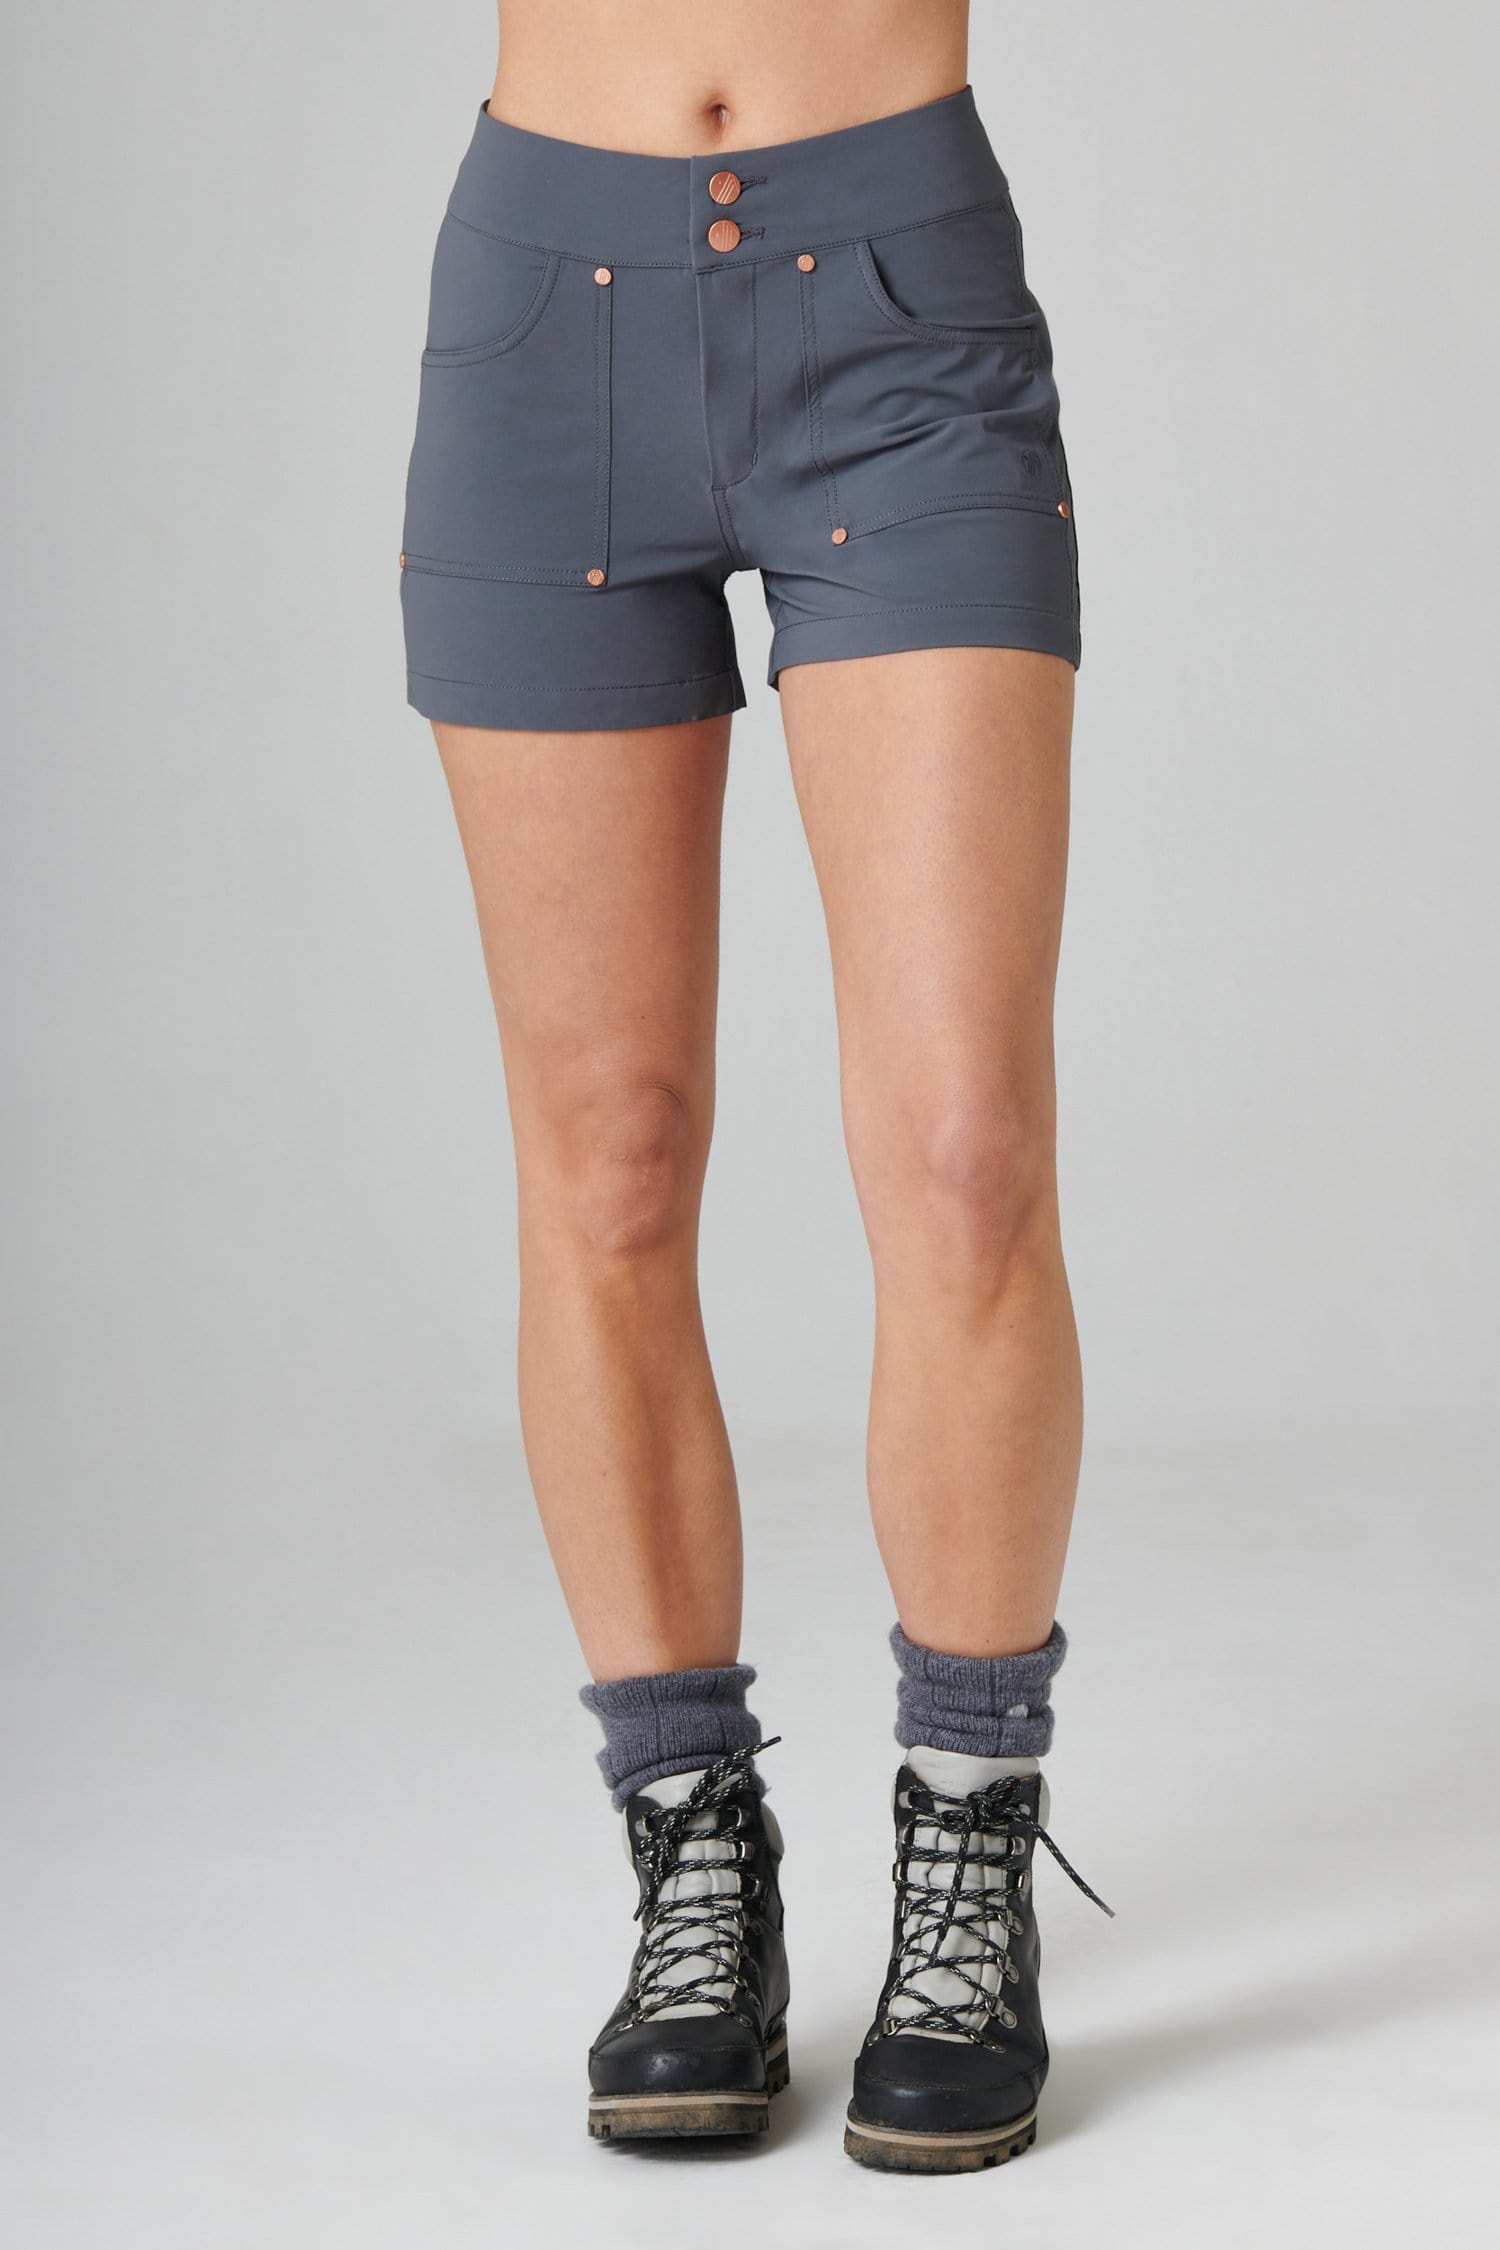 Trek Shorts - Storm Grey - 28 / Uk10 - Womens - Acai Outdoorwear